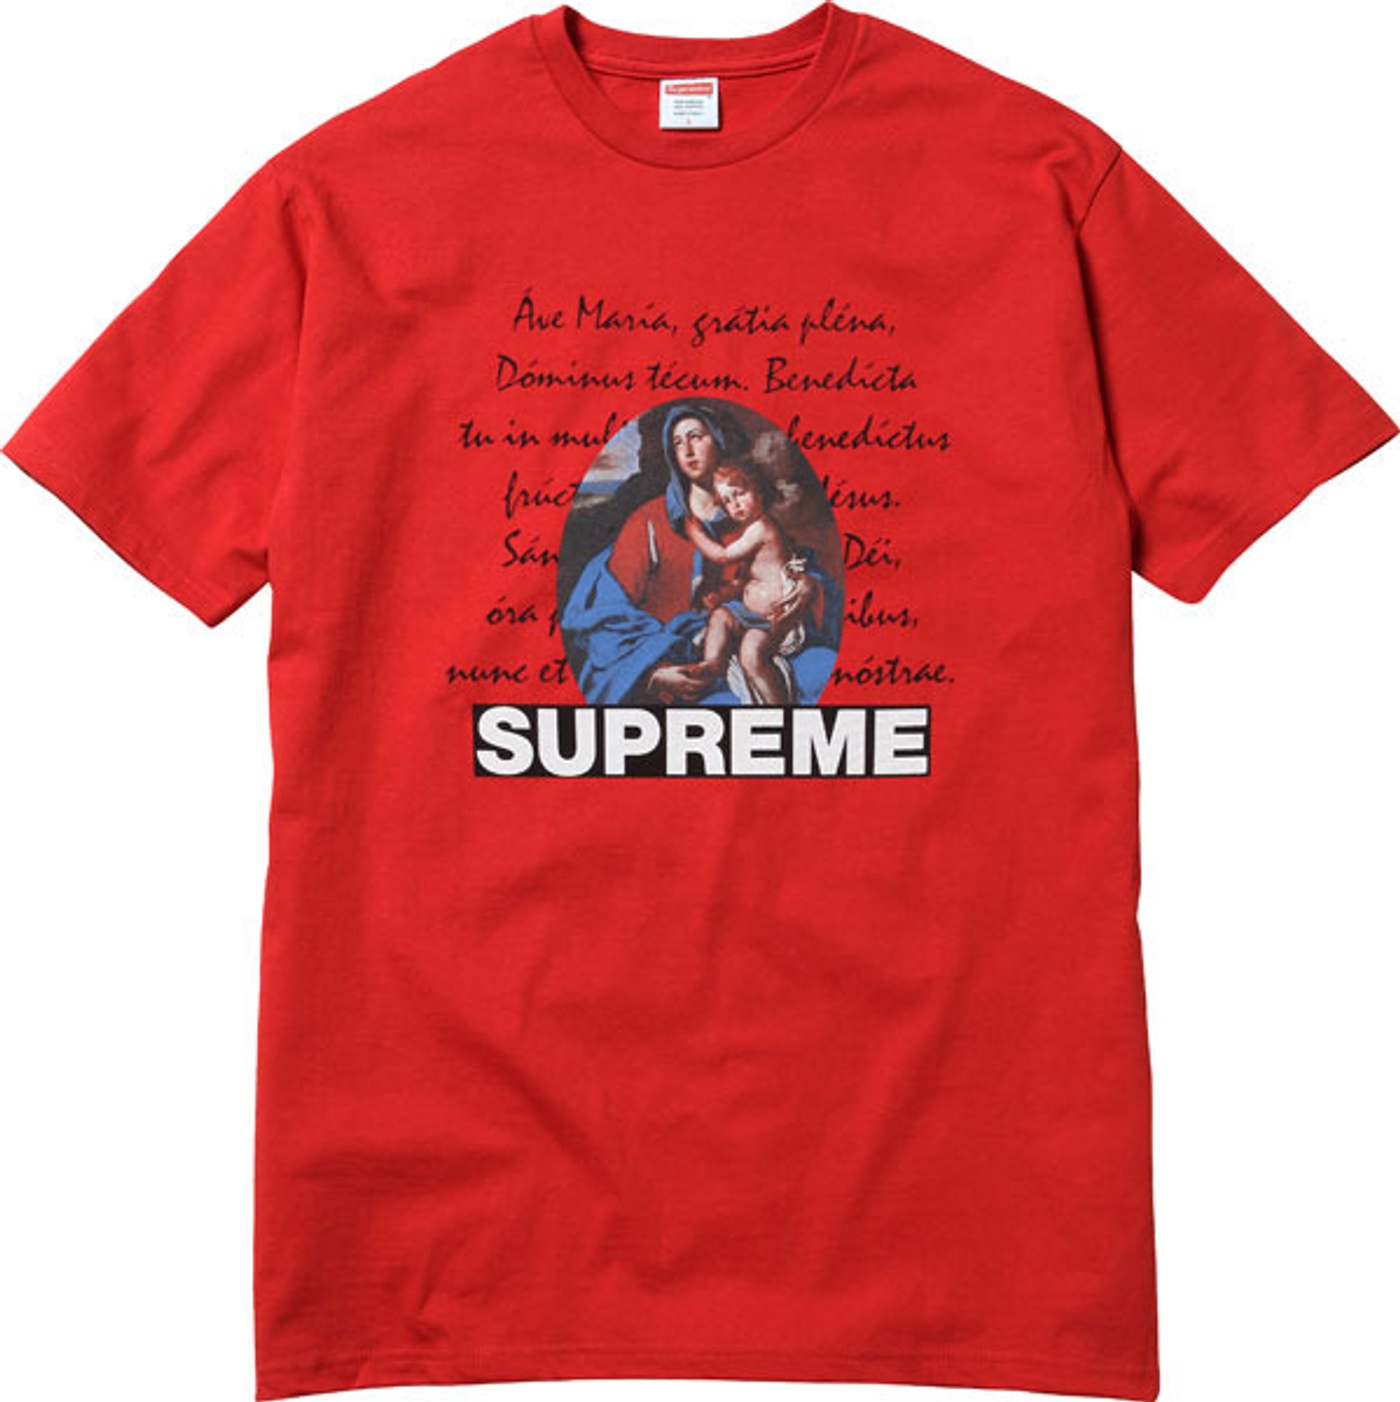 All cotton classic Supreme t-shirt (2/13)